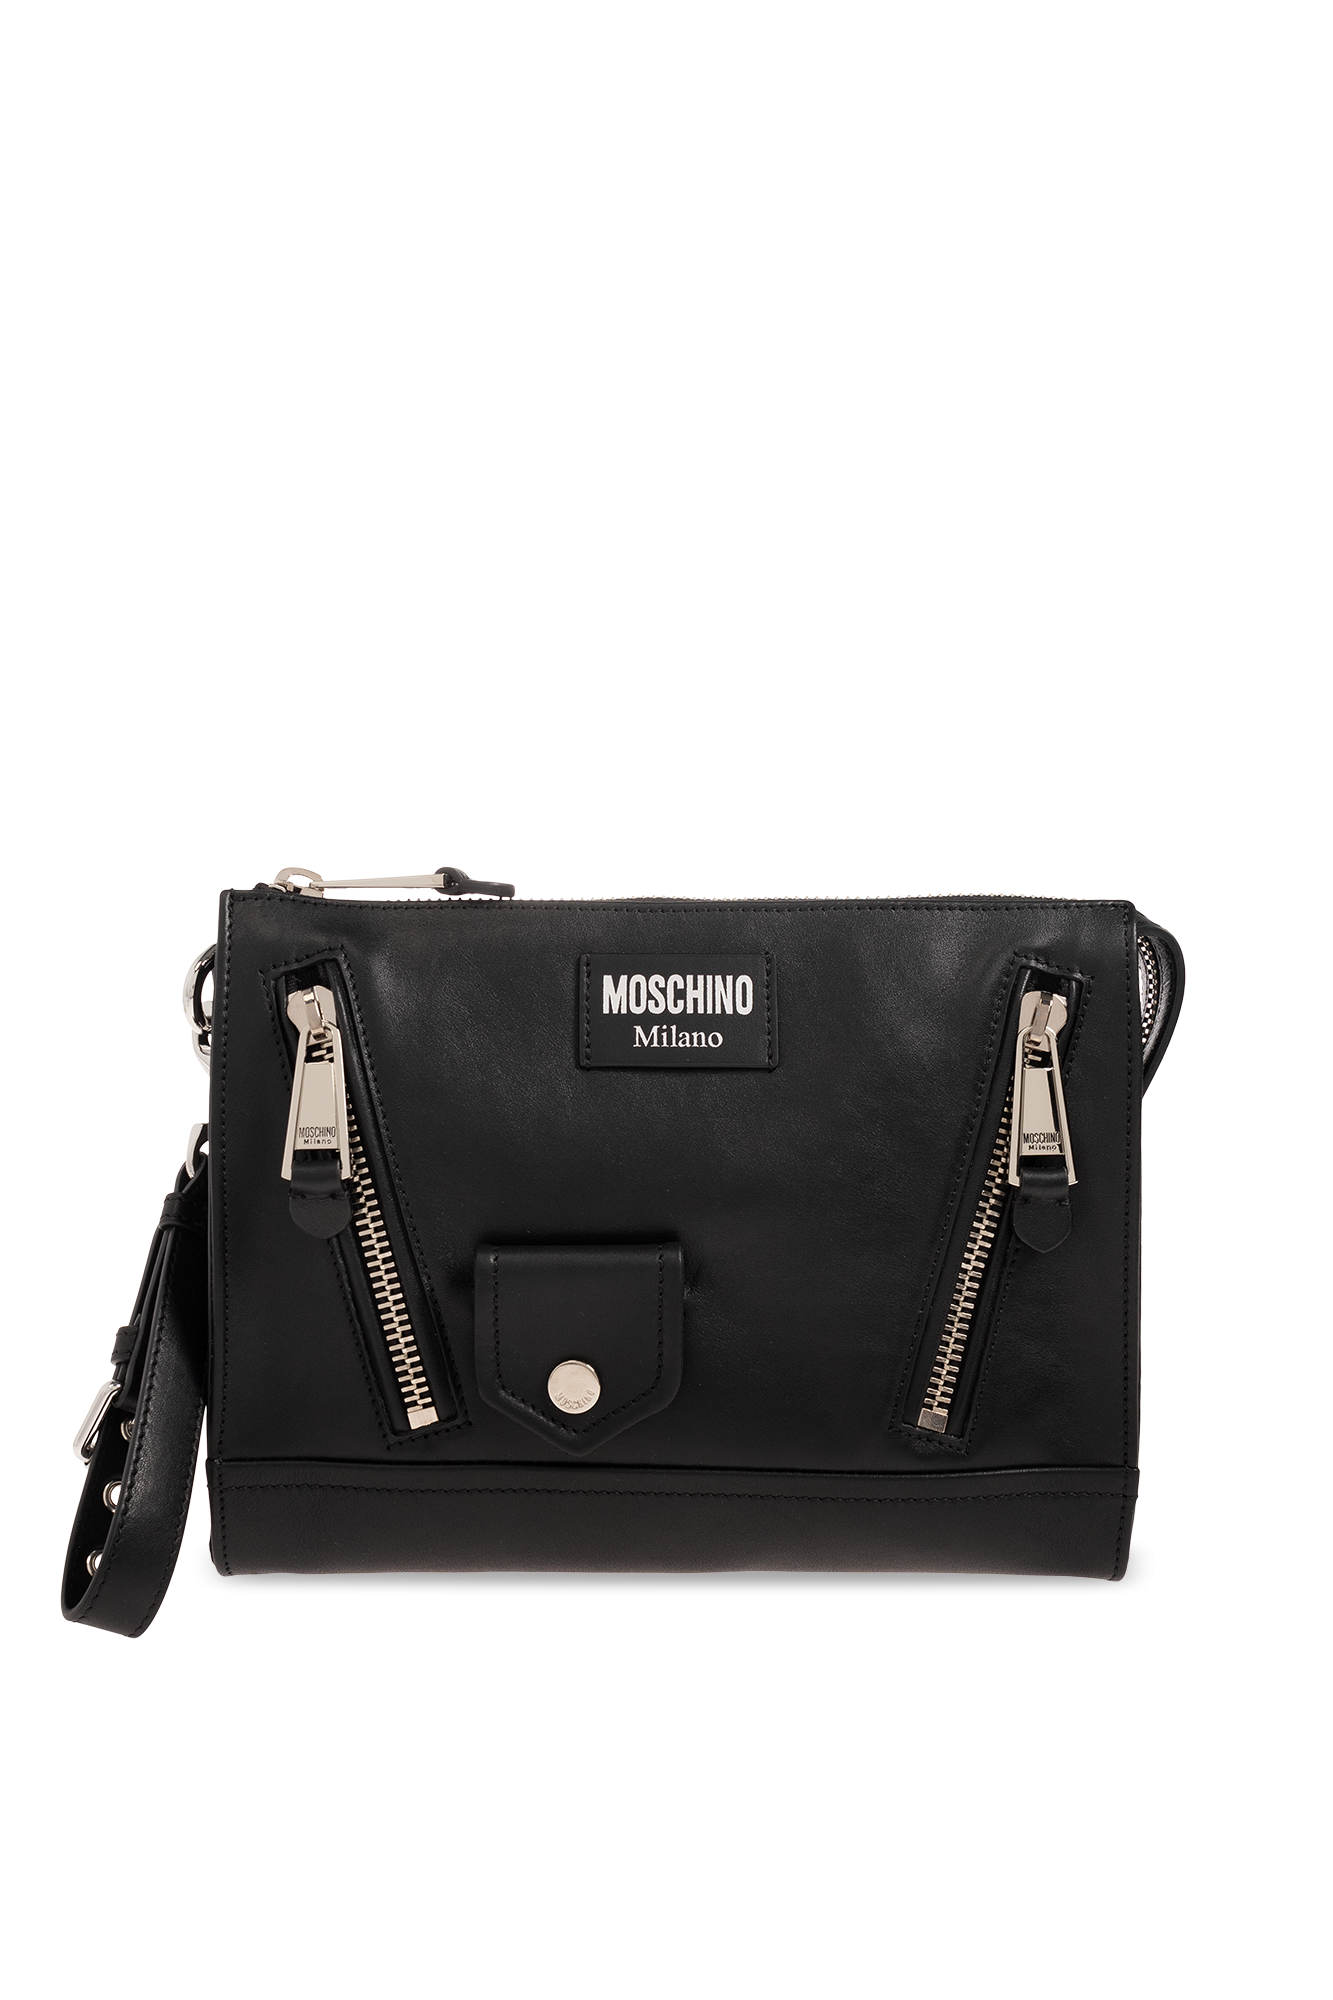 Black Handbag with logo Moschino - Vitkac Canada